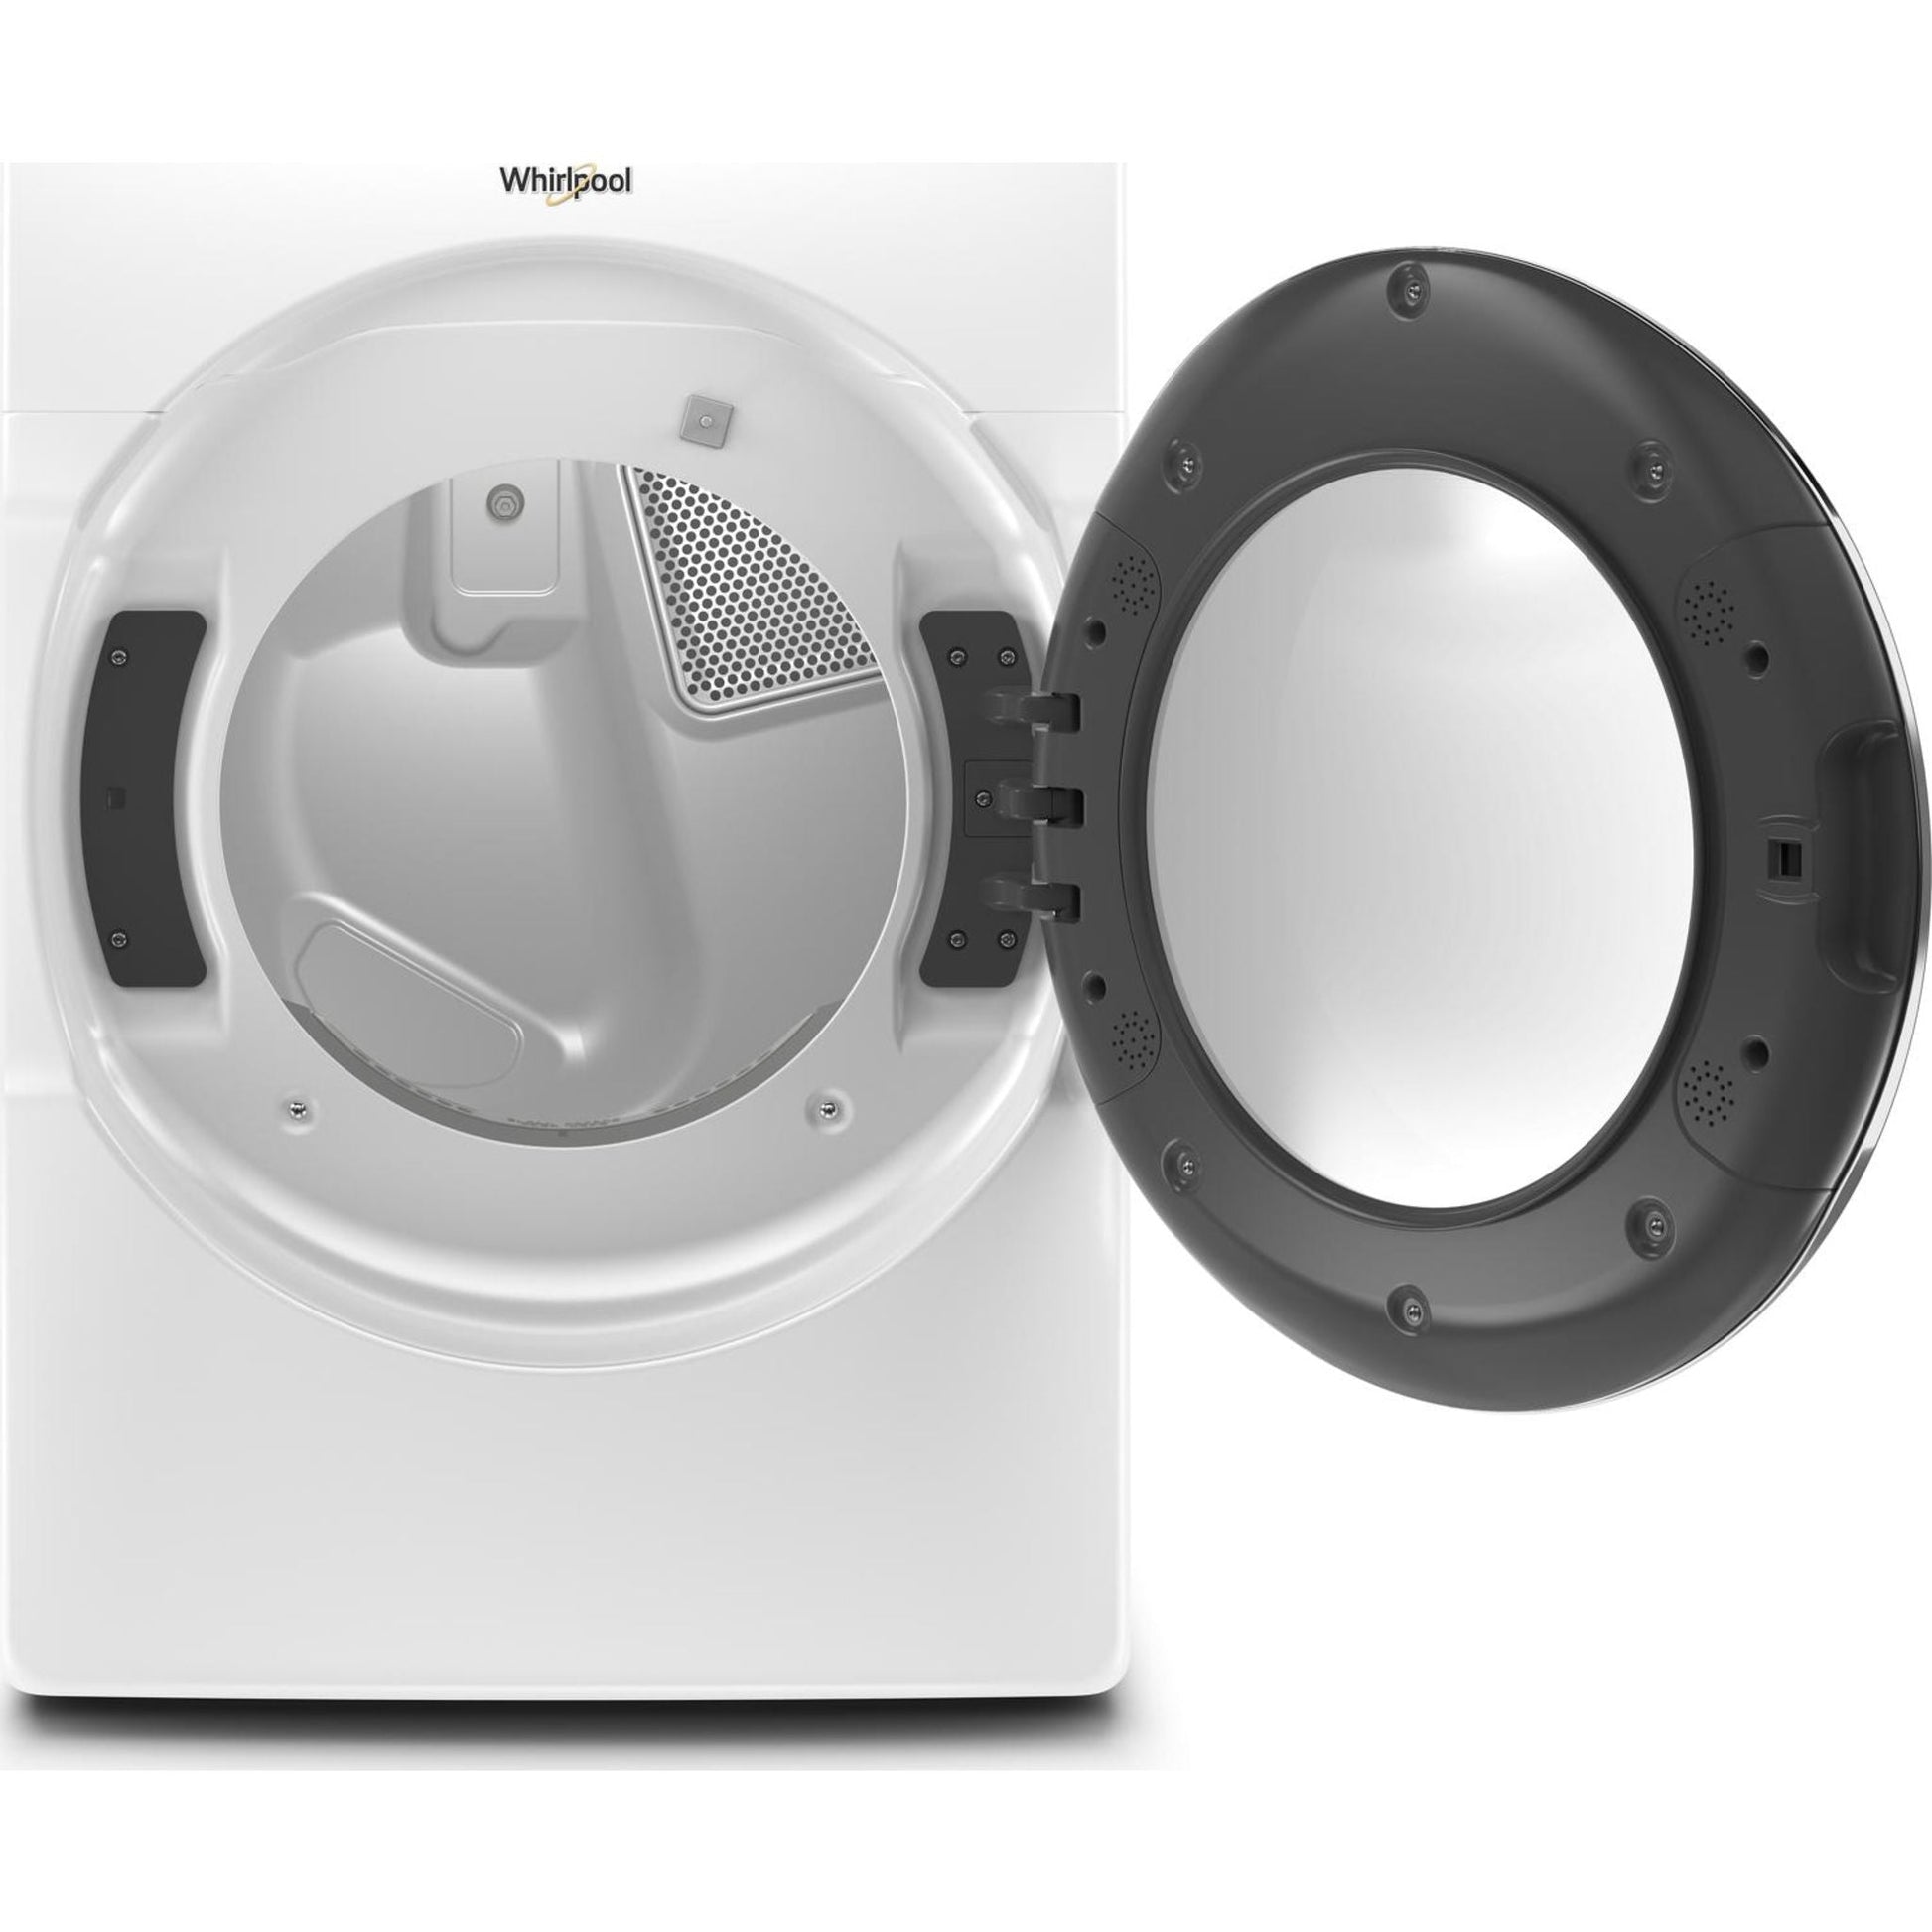 Whirlpool Gas Dryer (WGD9620HW) - White